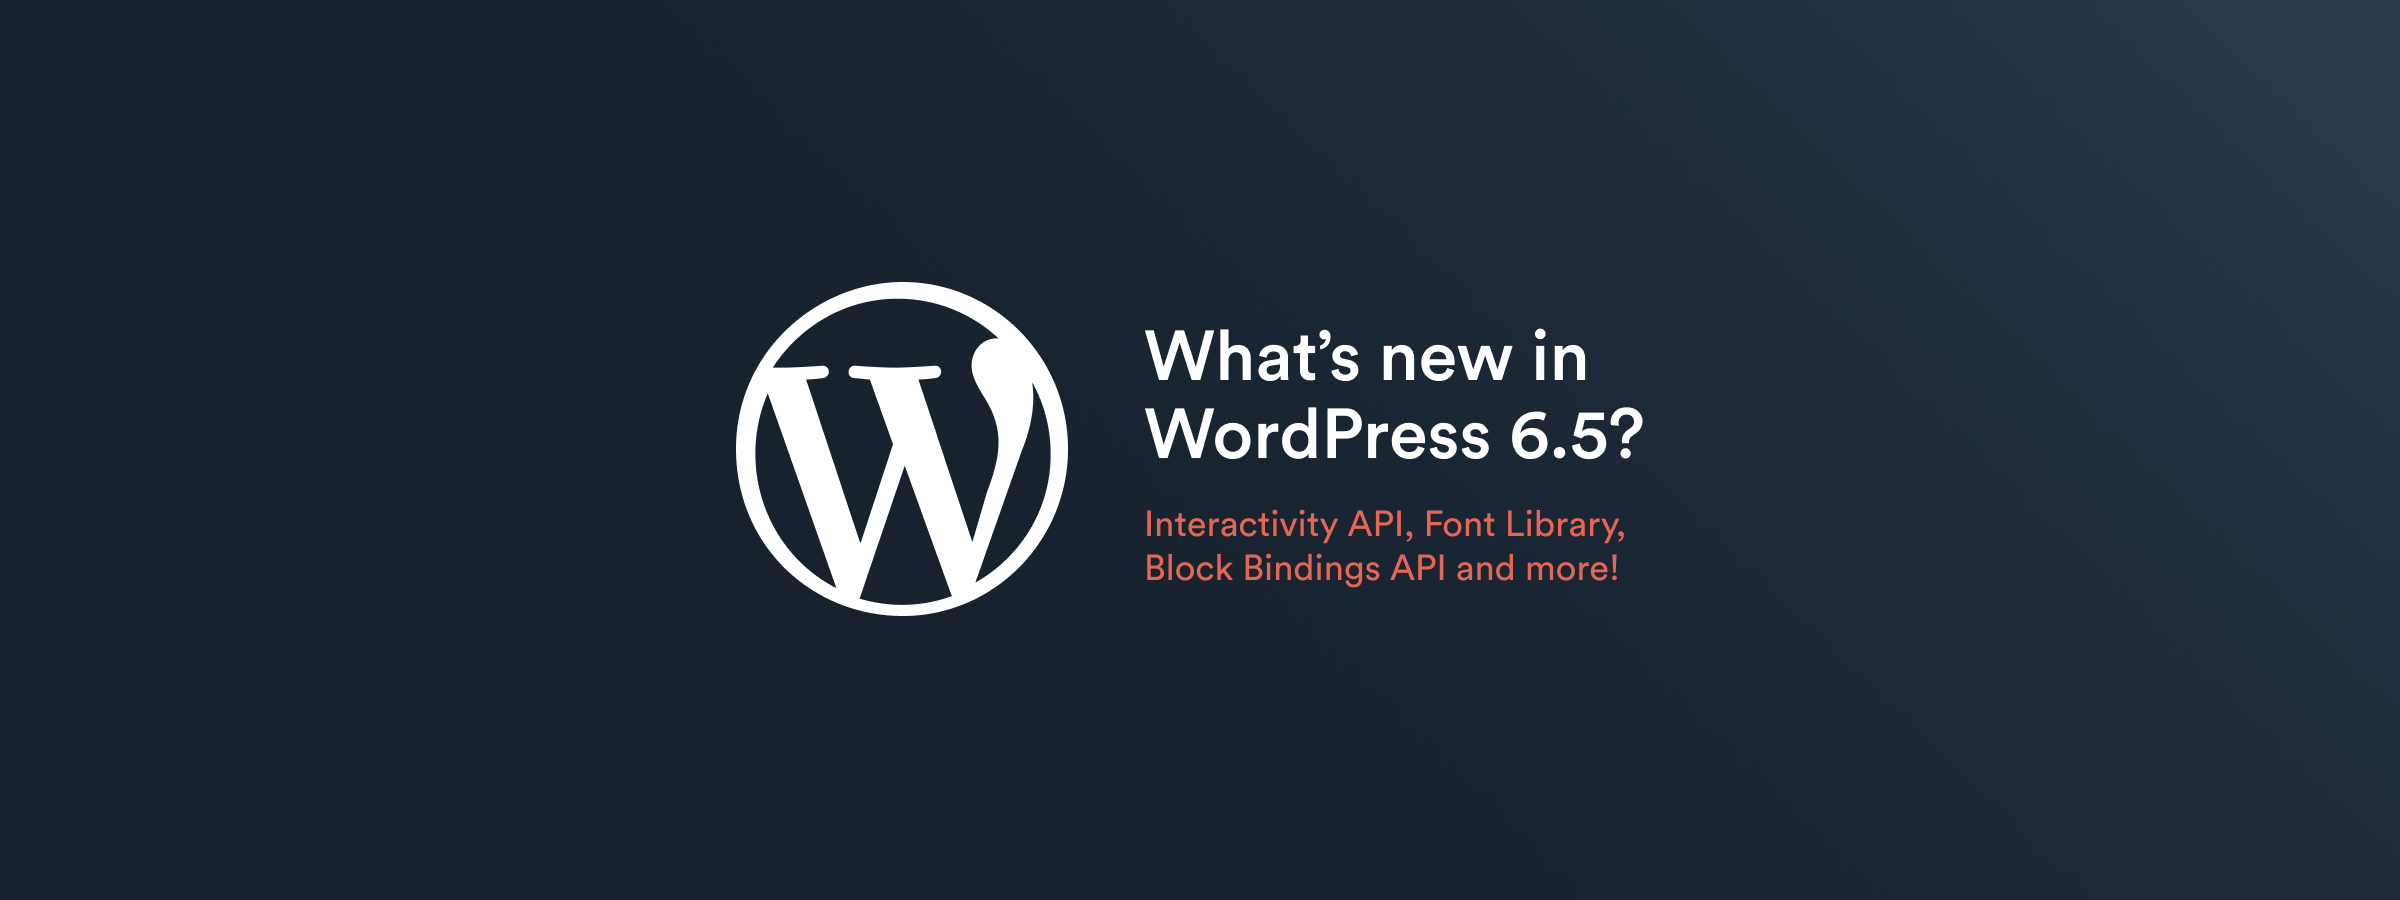 What’s new in WordPress 6.5